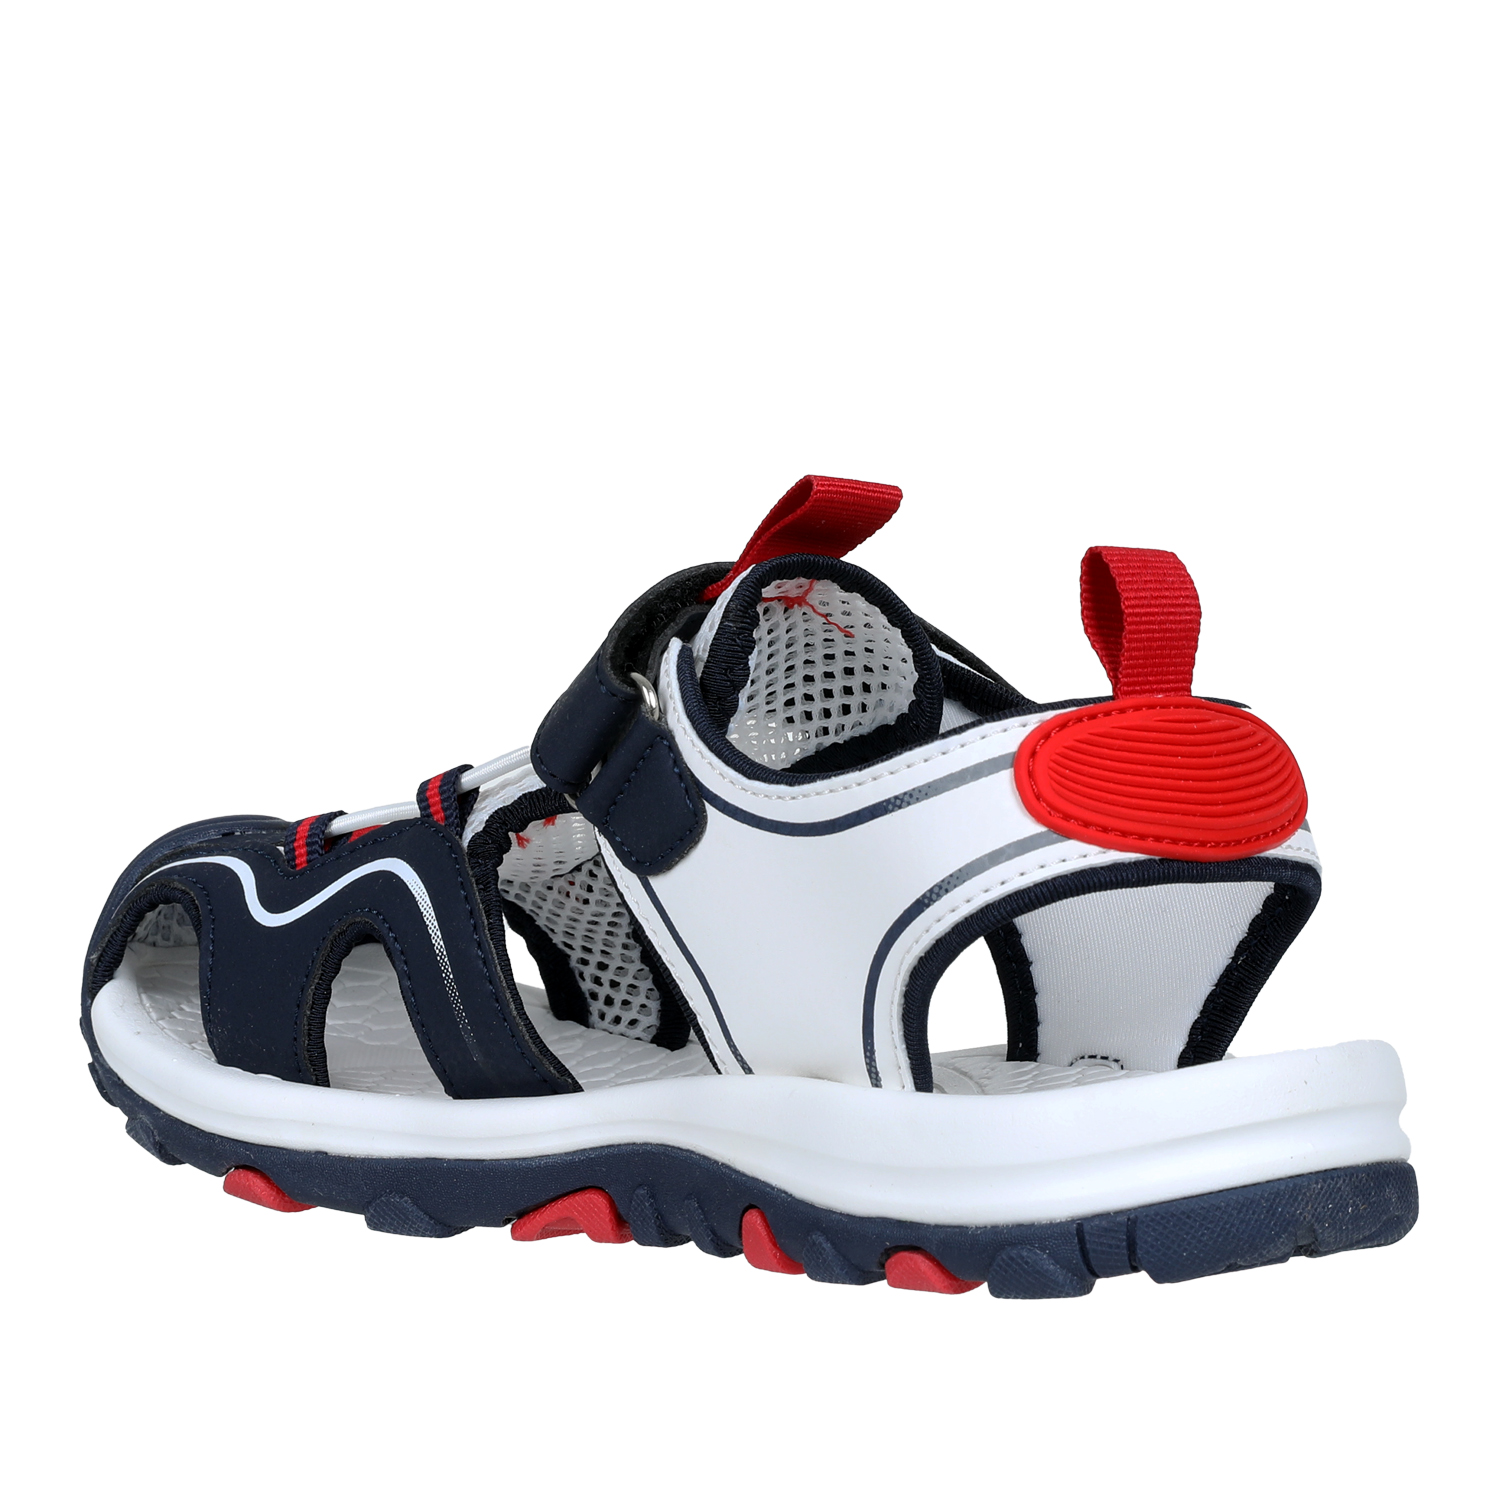 Сандалии детские Toread Children's sandals Navy/White